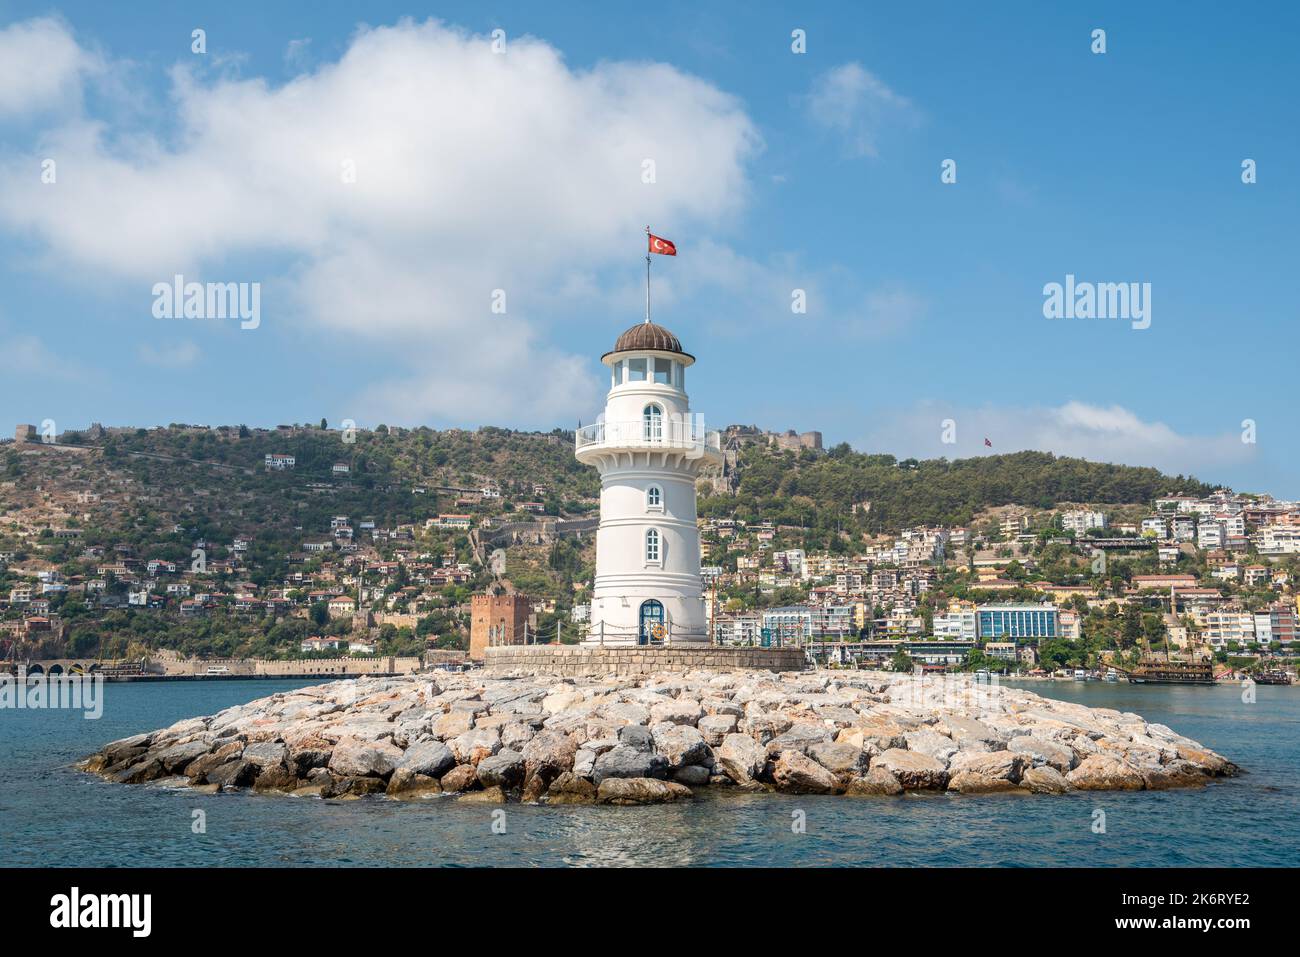 Alanya deniz feneri hi-res stock photography and images - Alamy